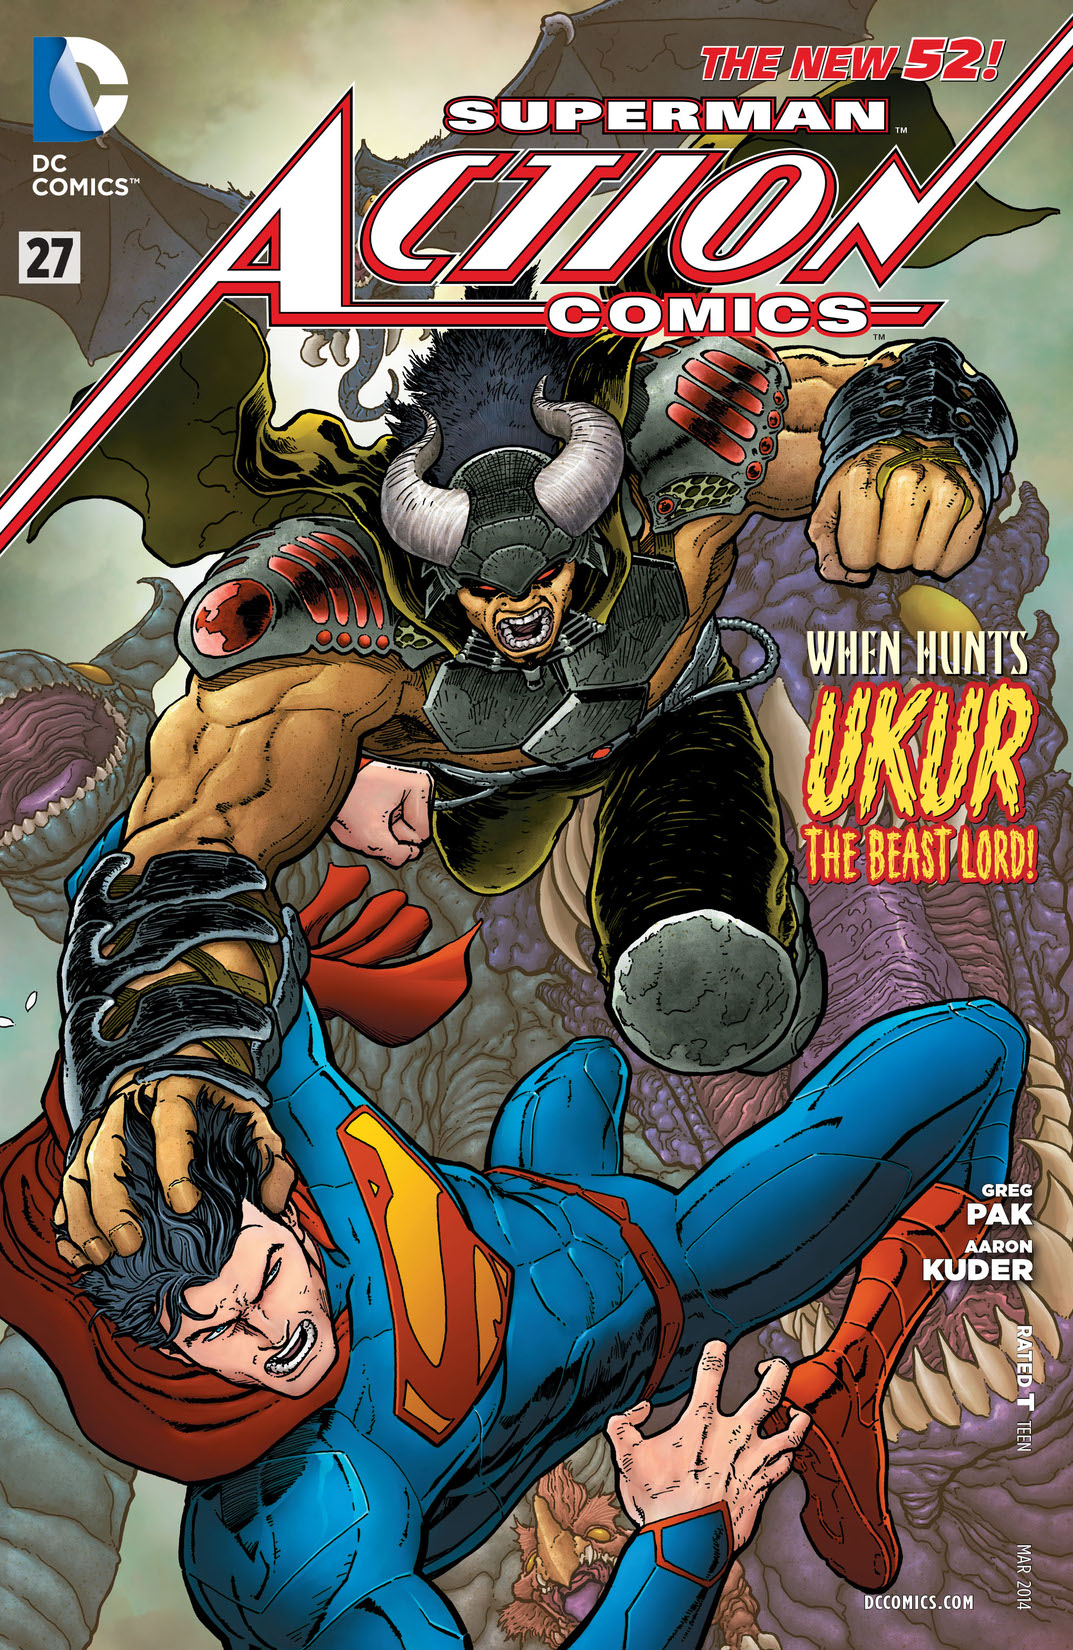 Action Comics (2011-) #27 preview images